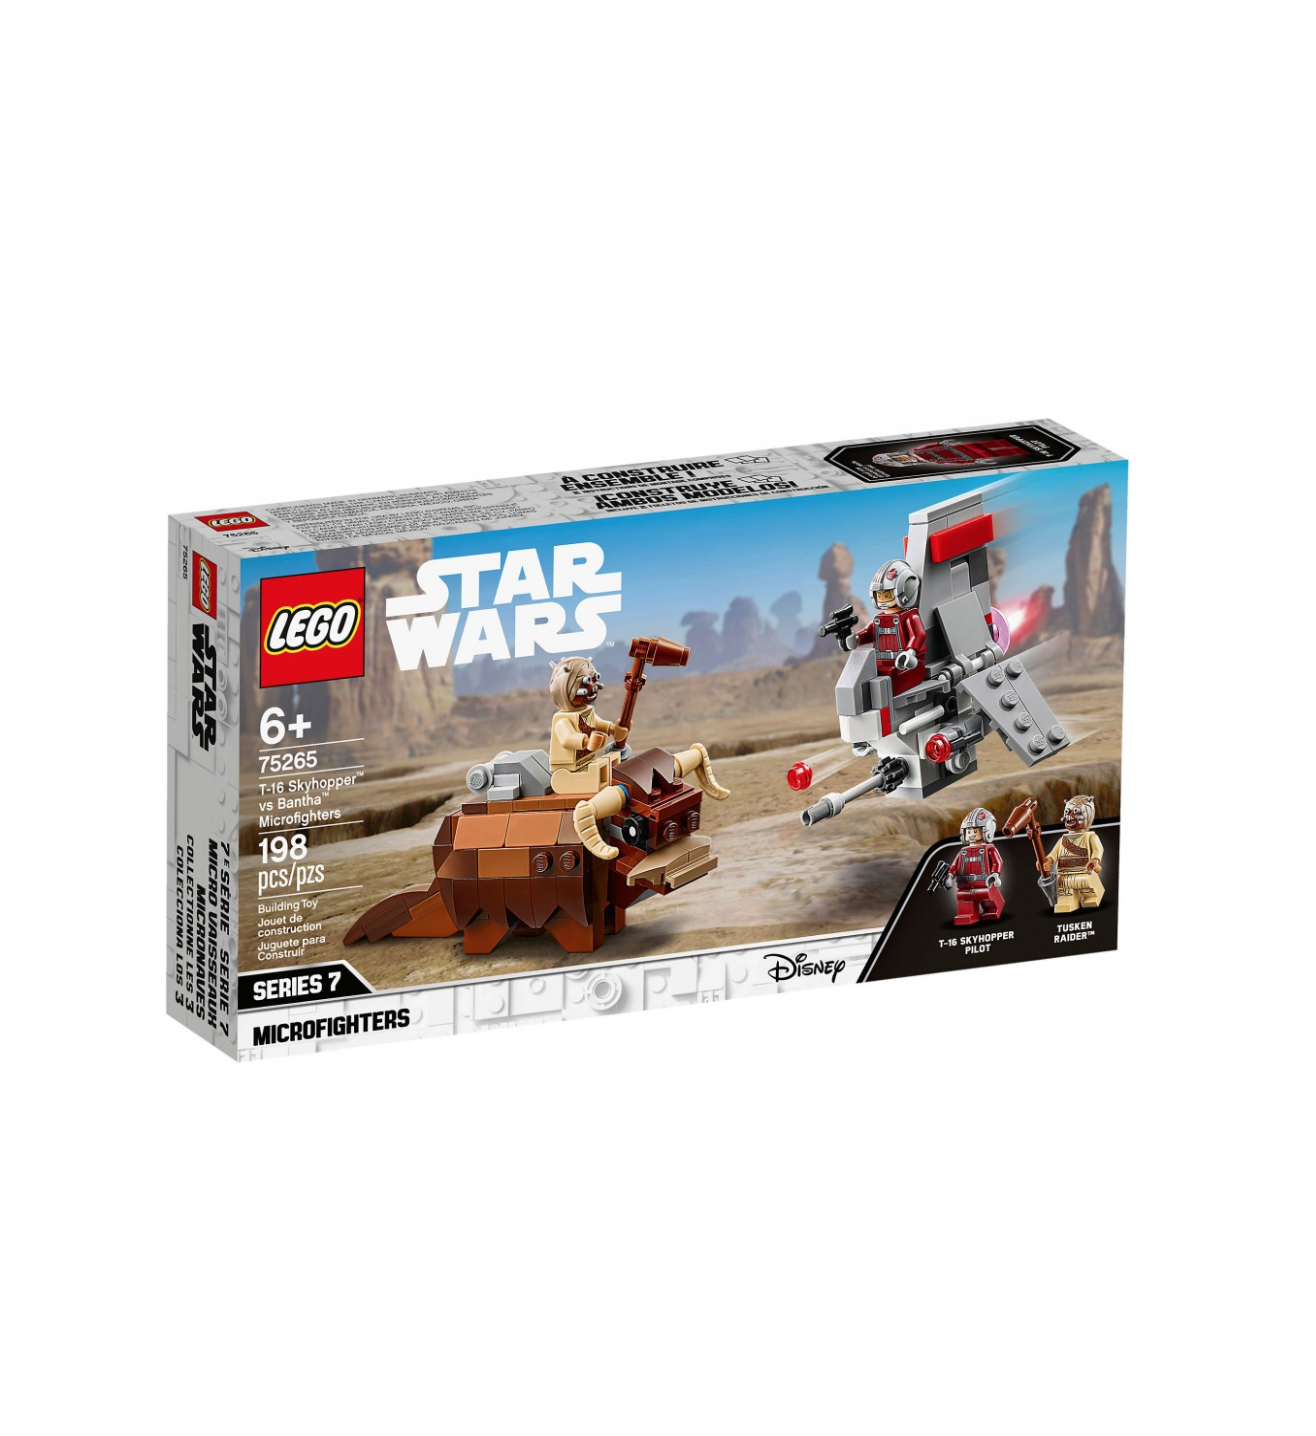 LEGO STAR WARS T-16SKYHOPPER VS BANTHA MICROFIGHTERS 75265 JOUET JEU JEUX ITEM 6288989 CONSTRUCTION ENFANT NOEL NEUF 5702016617115 COMASOUND KARTEL